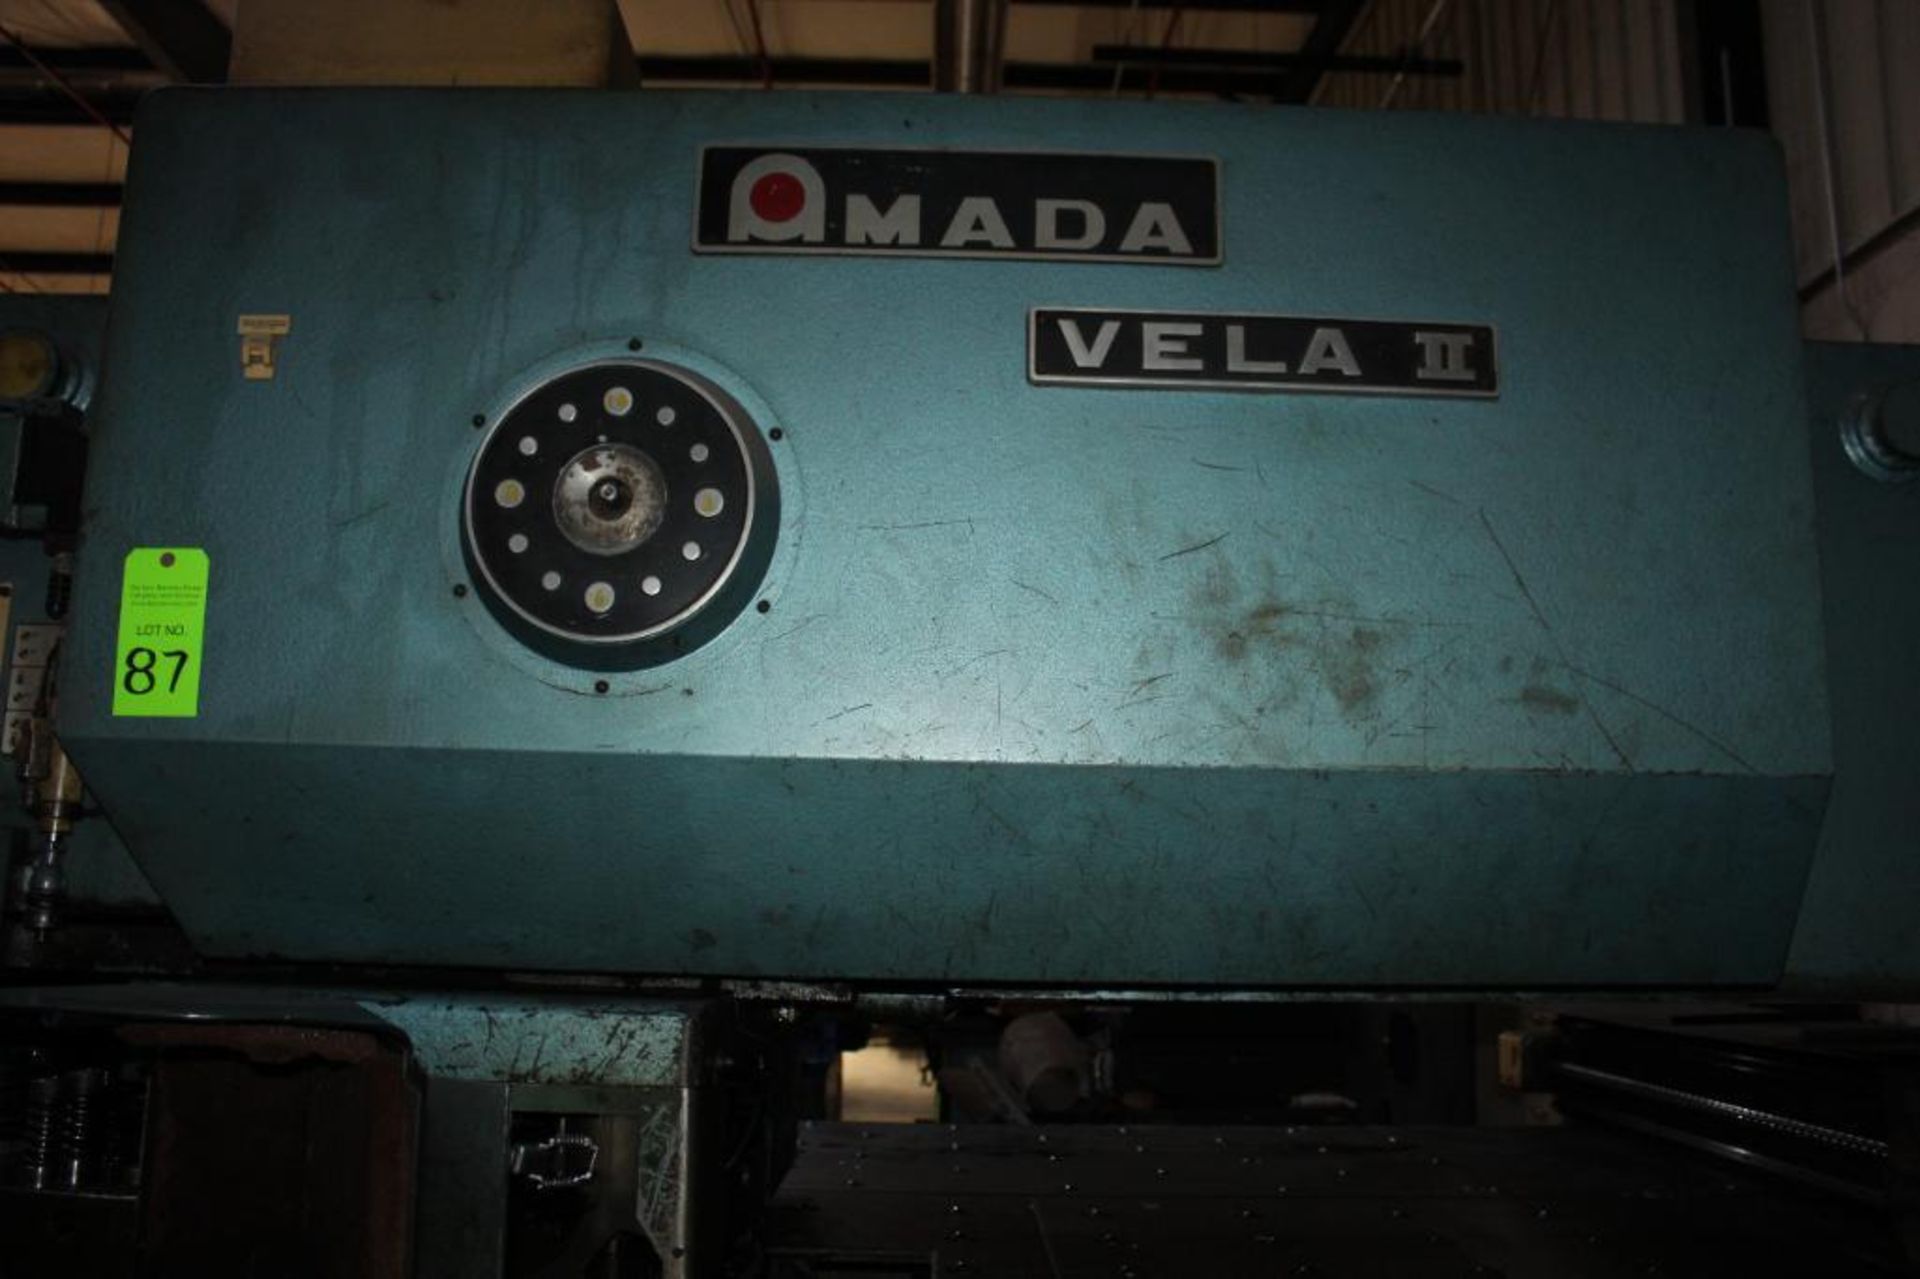 1983 Amada Vela II 30 Ton CNC Punch Press 305050 W/ Amada Fanuc-O System 6M CNC Control - Image 8 of 25